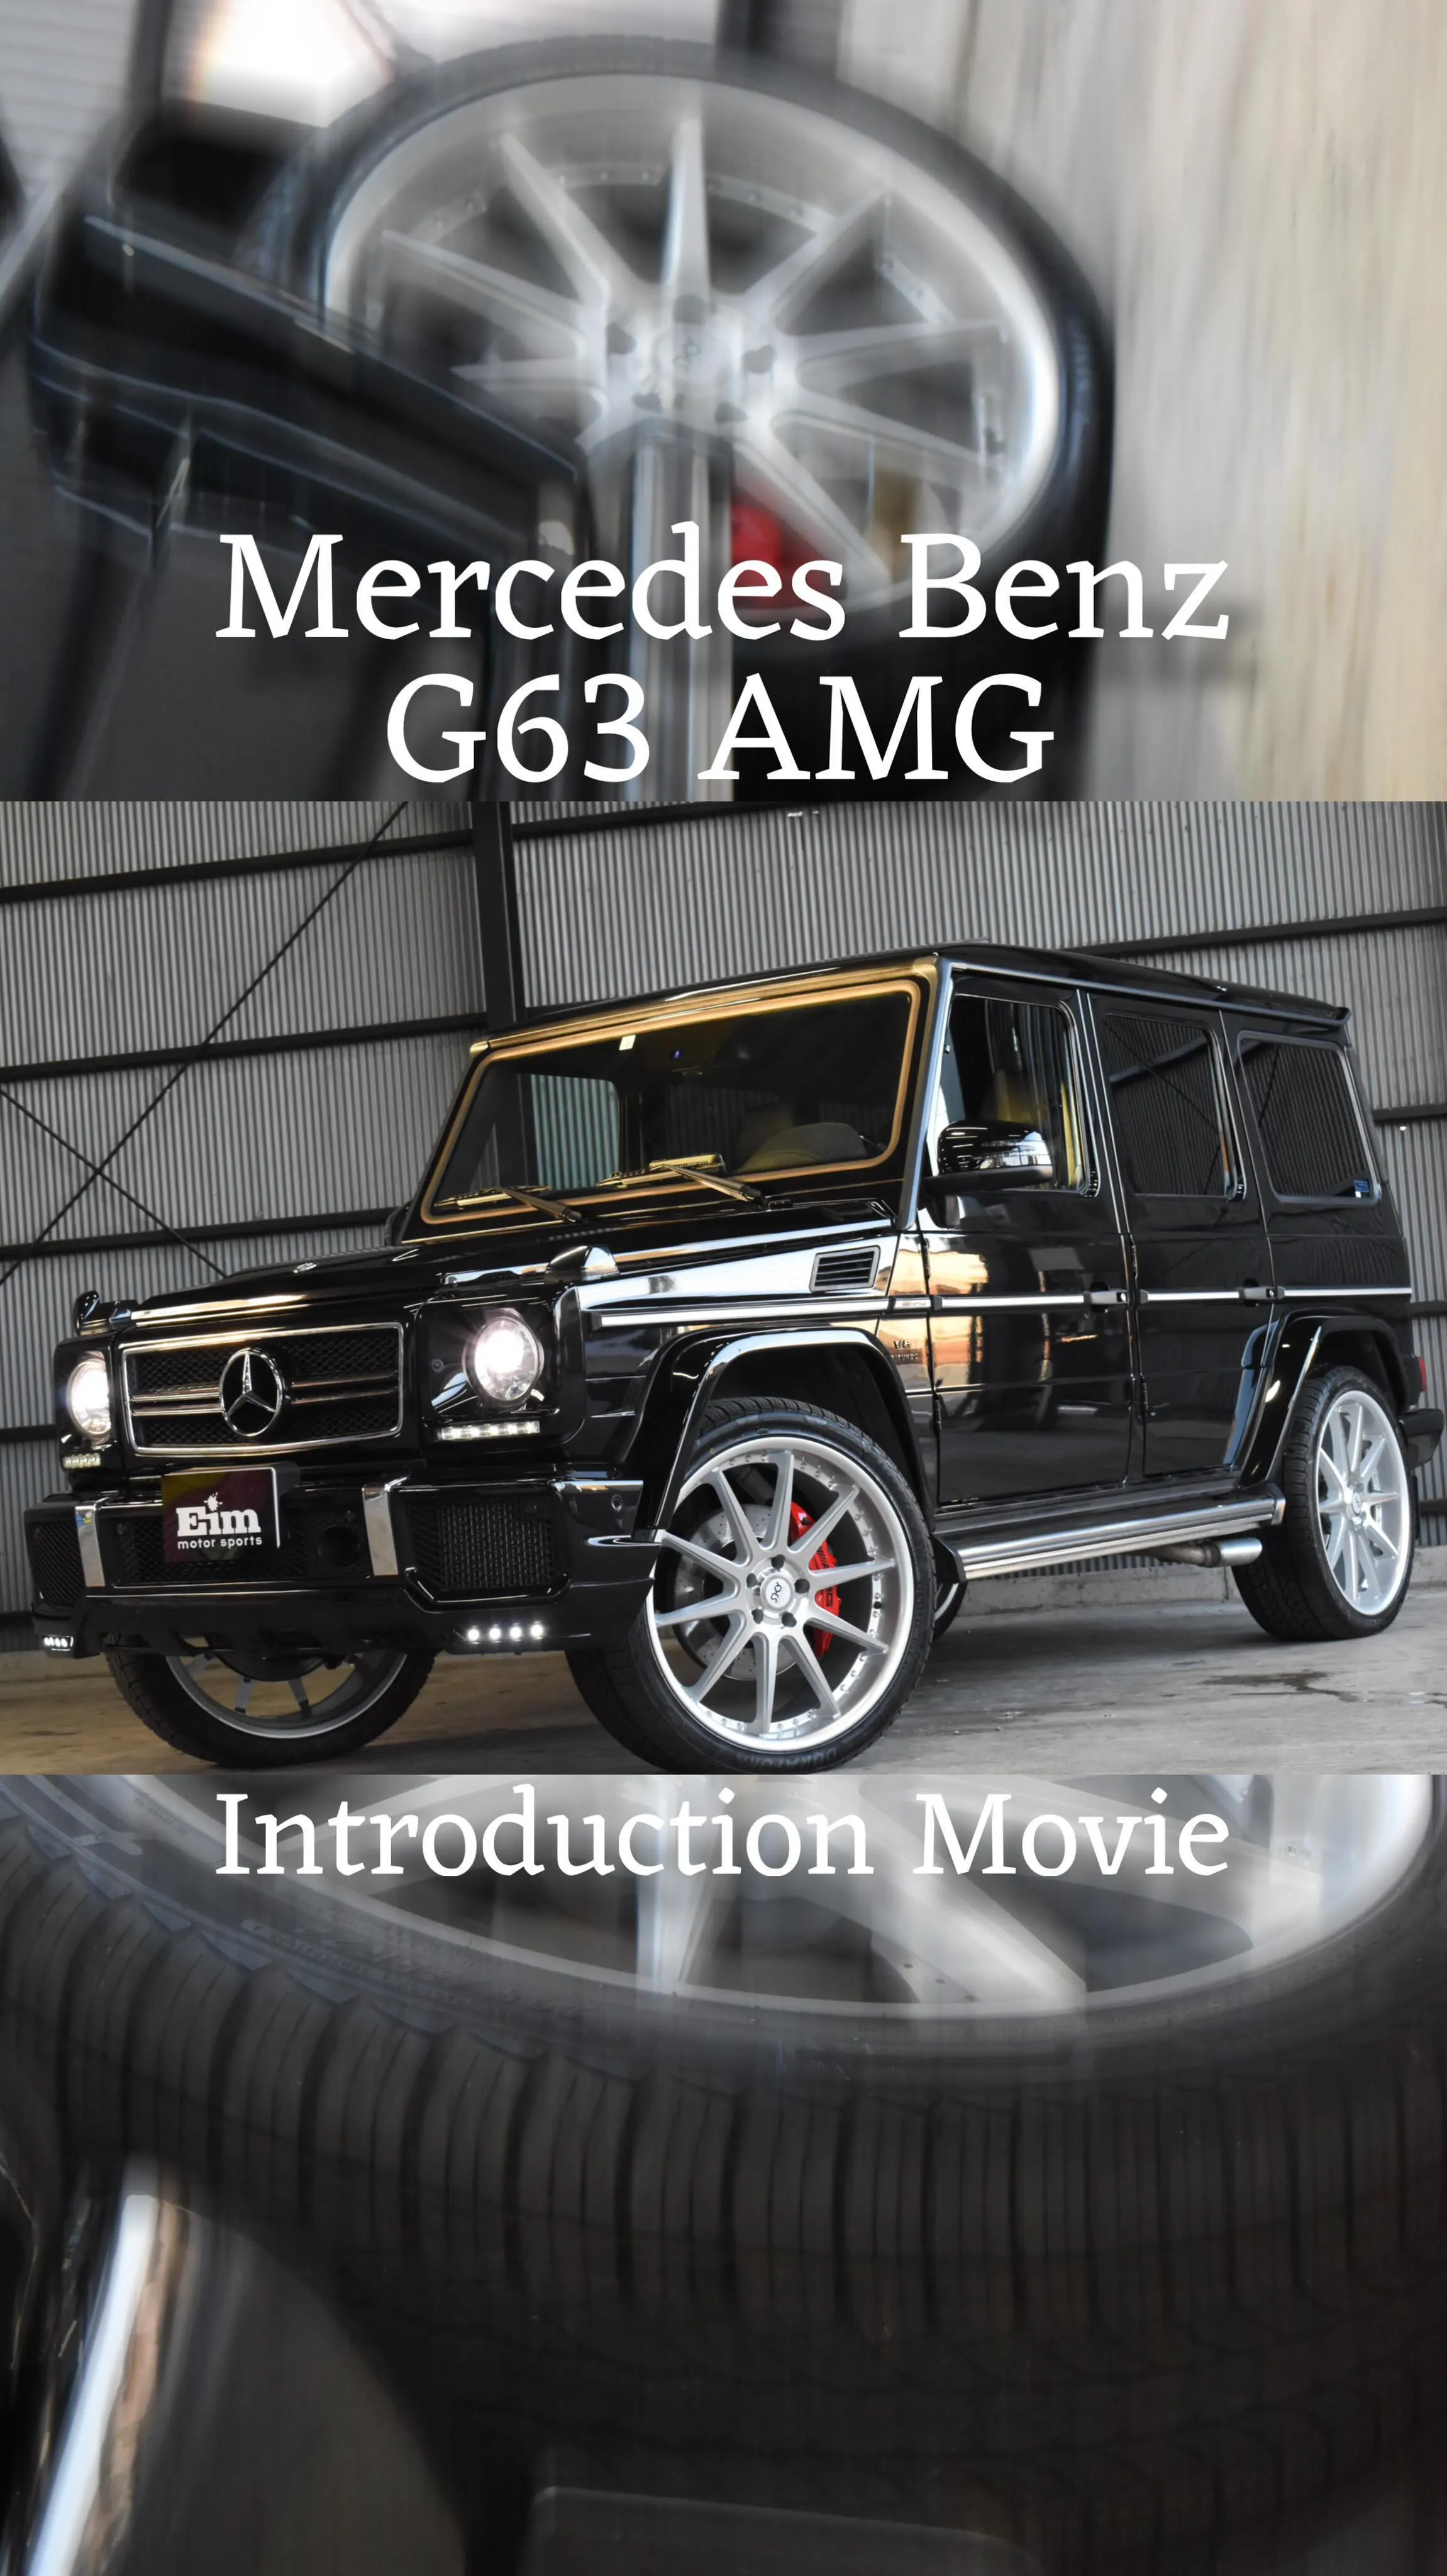 Mercedes Benz G63 AMG